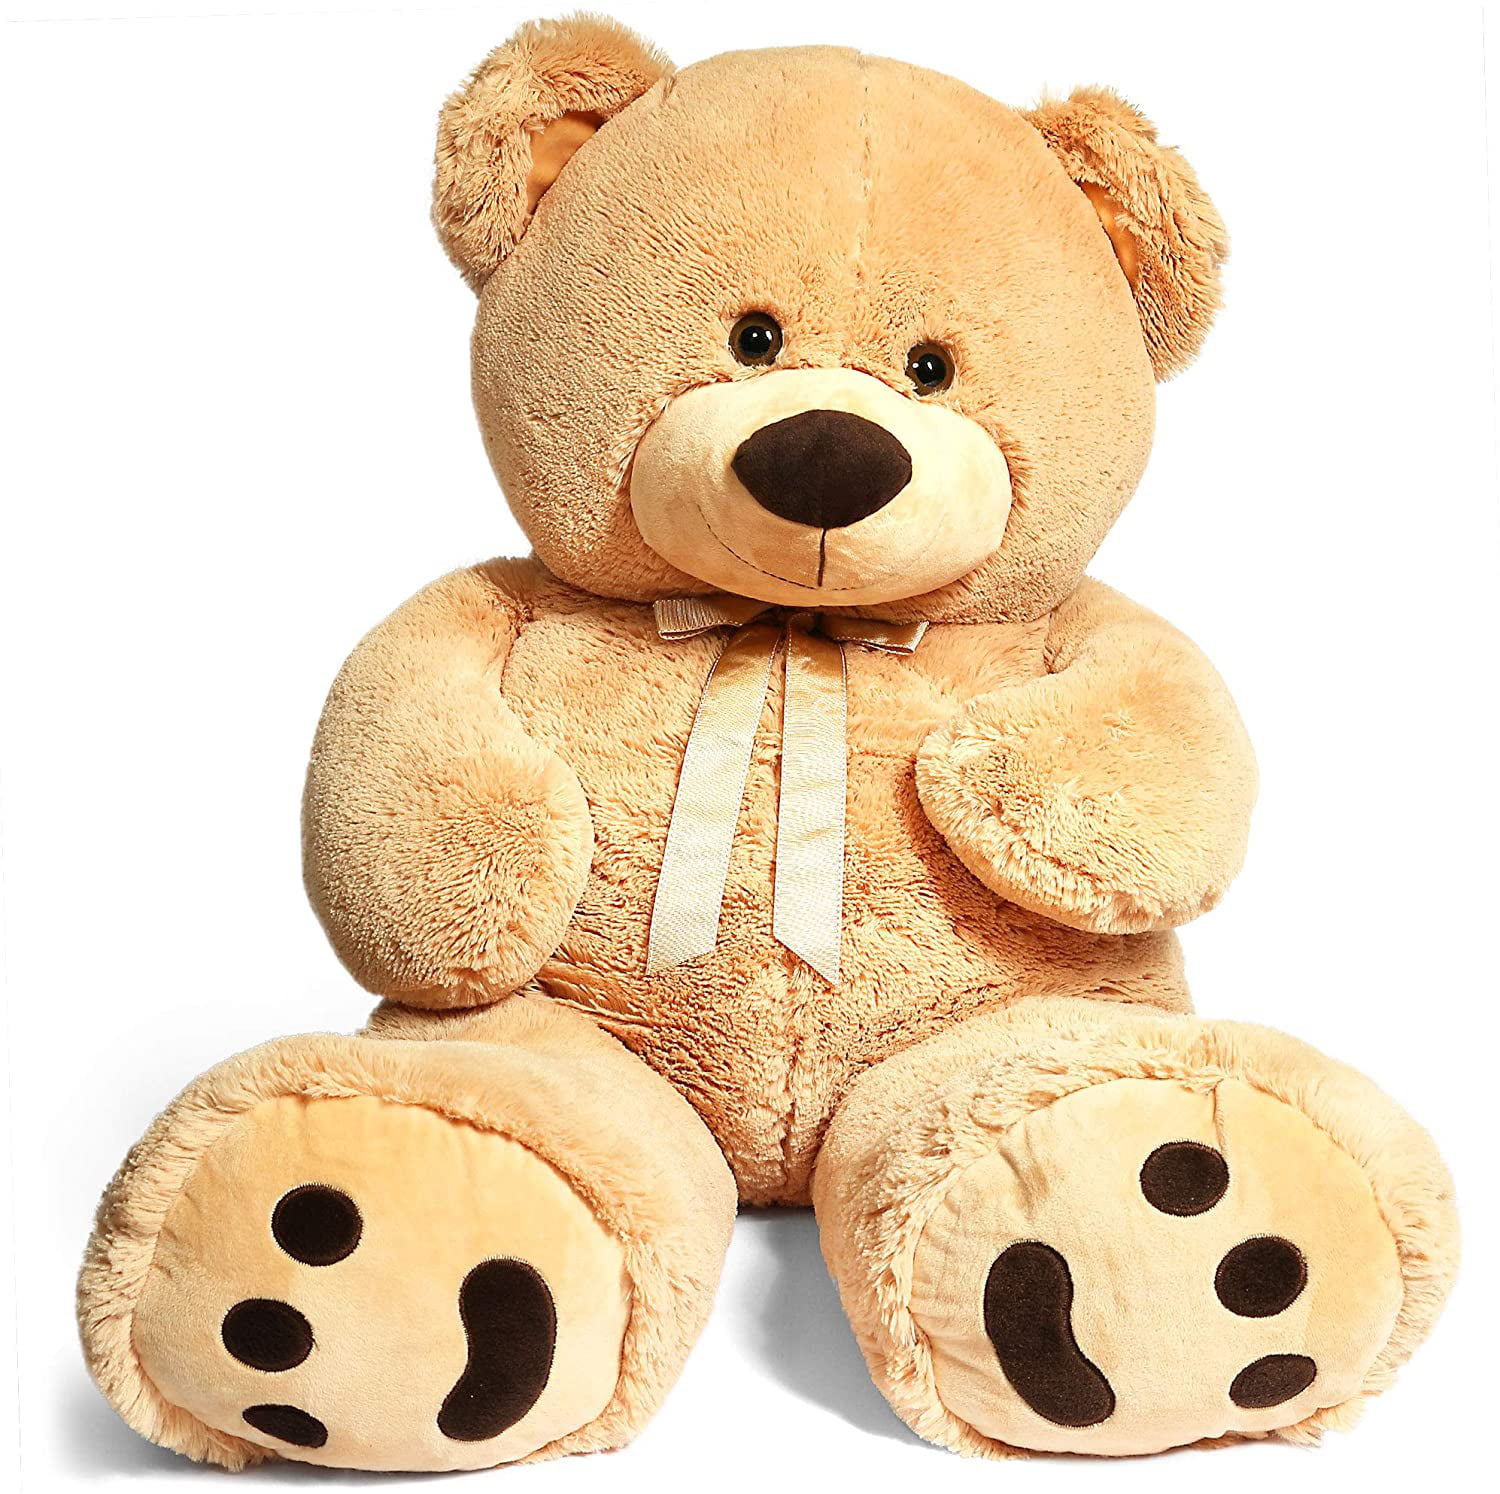 Giant plush toy latest 100cm/39 inch teddy bear super soft 100% cotton toy 